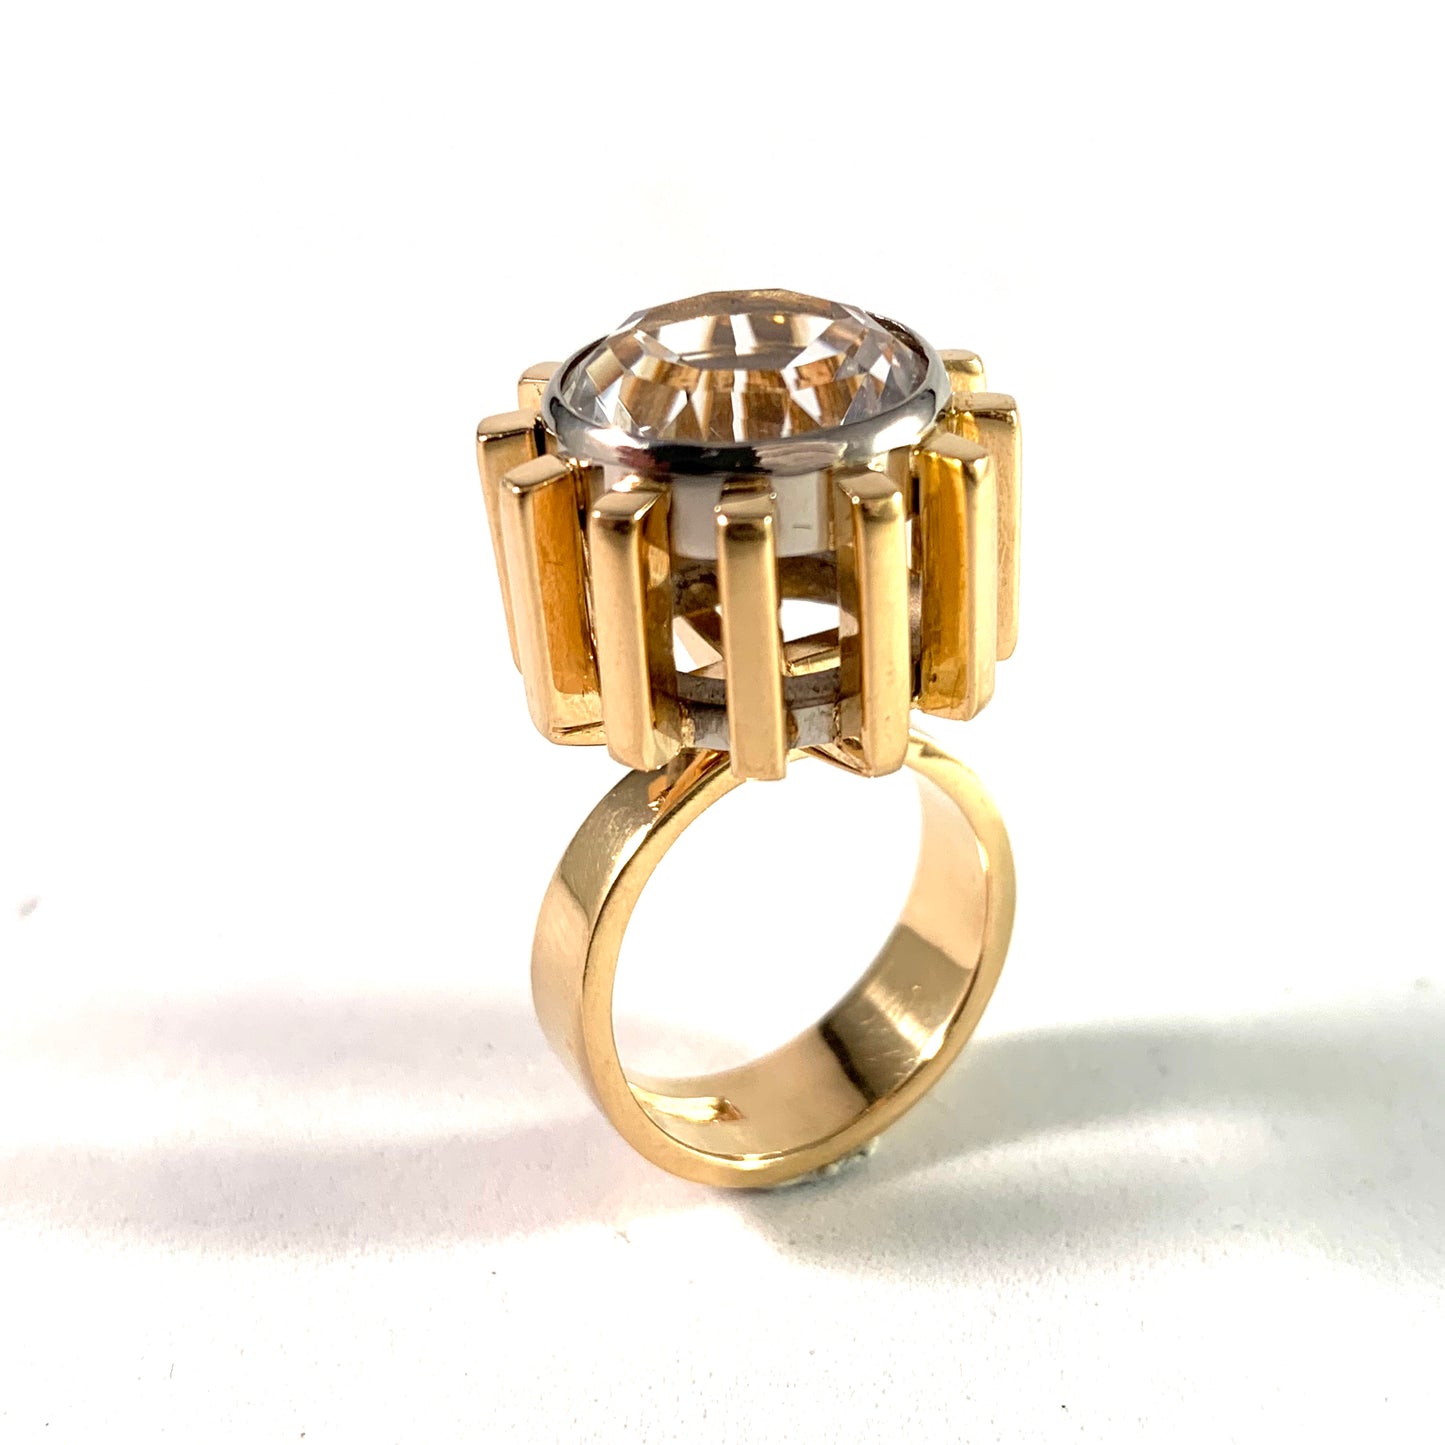 Claes E Giertta, Stockholm year 1965 Massive 19.3 gram 18k Gold Rock Crystal Modernist Unique Ring.